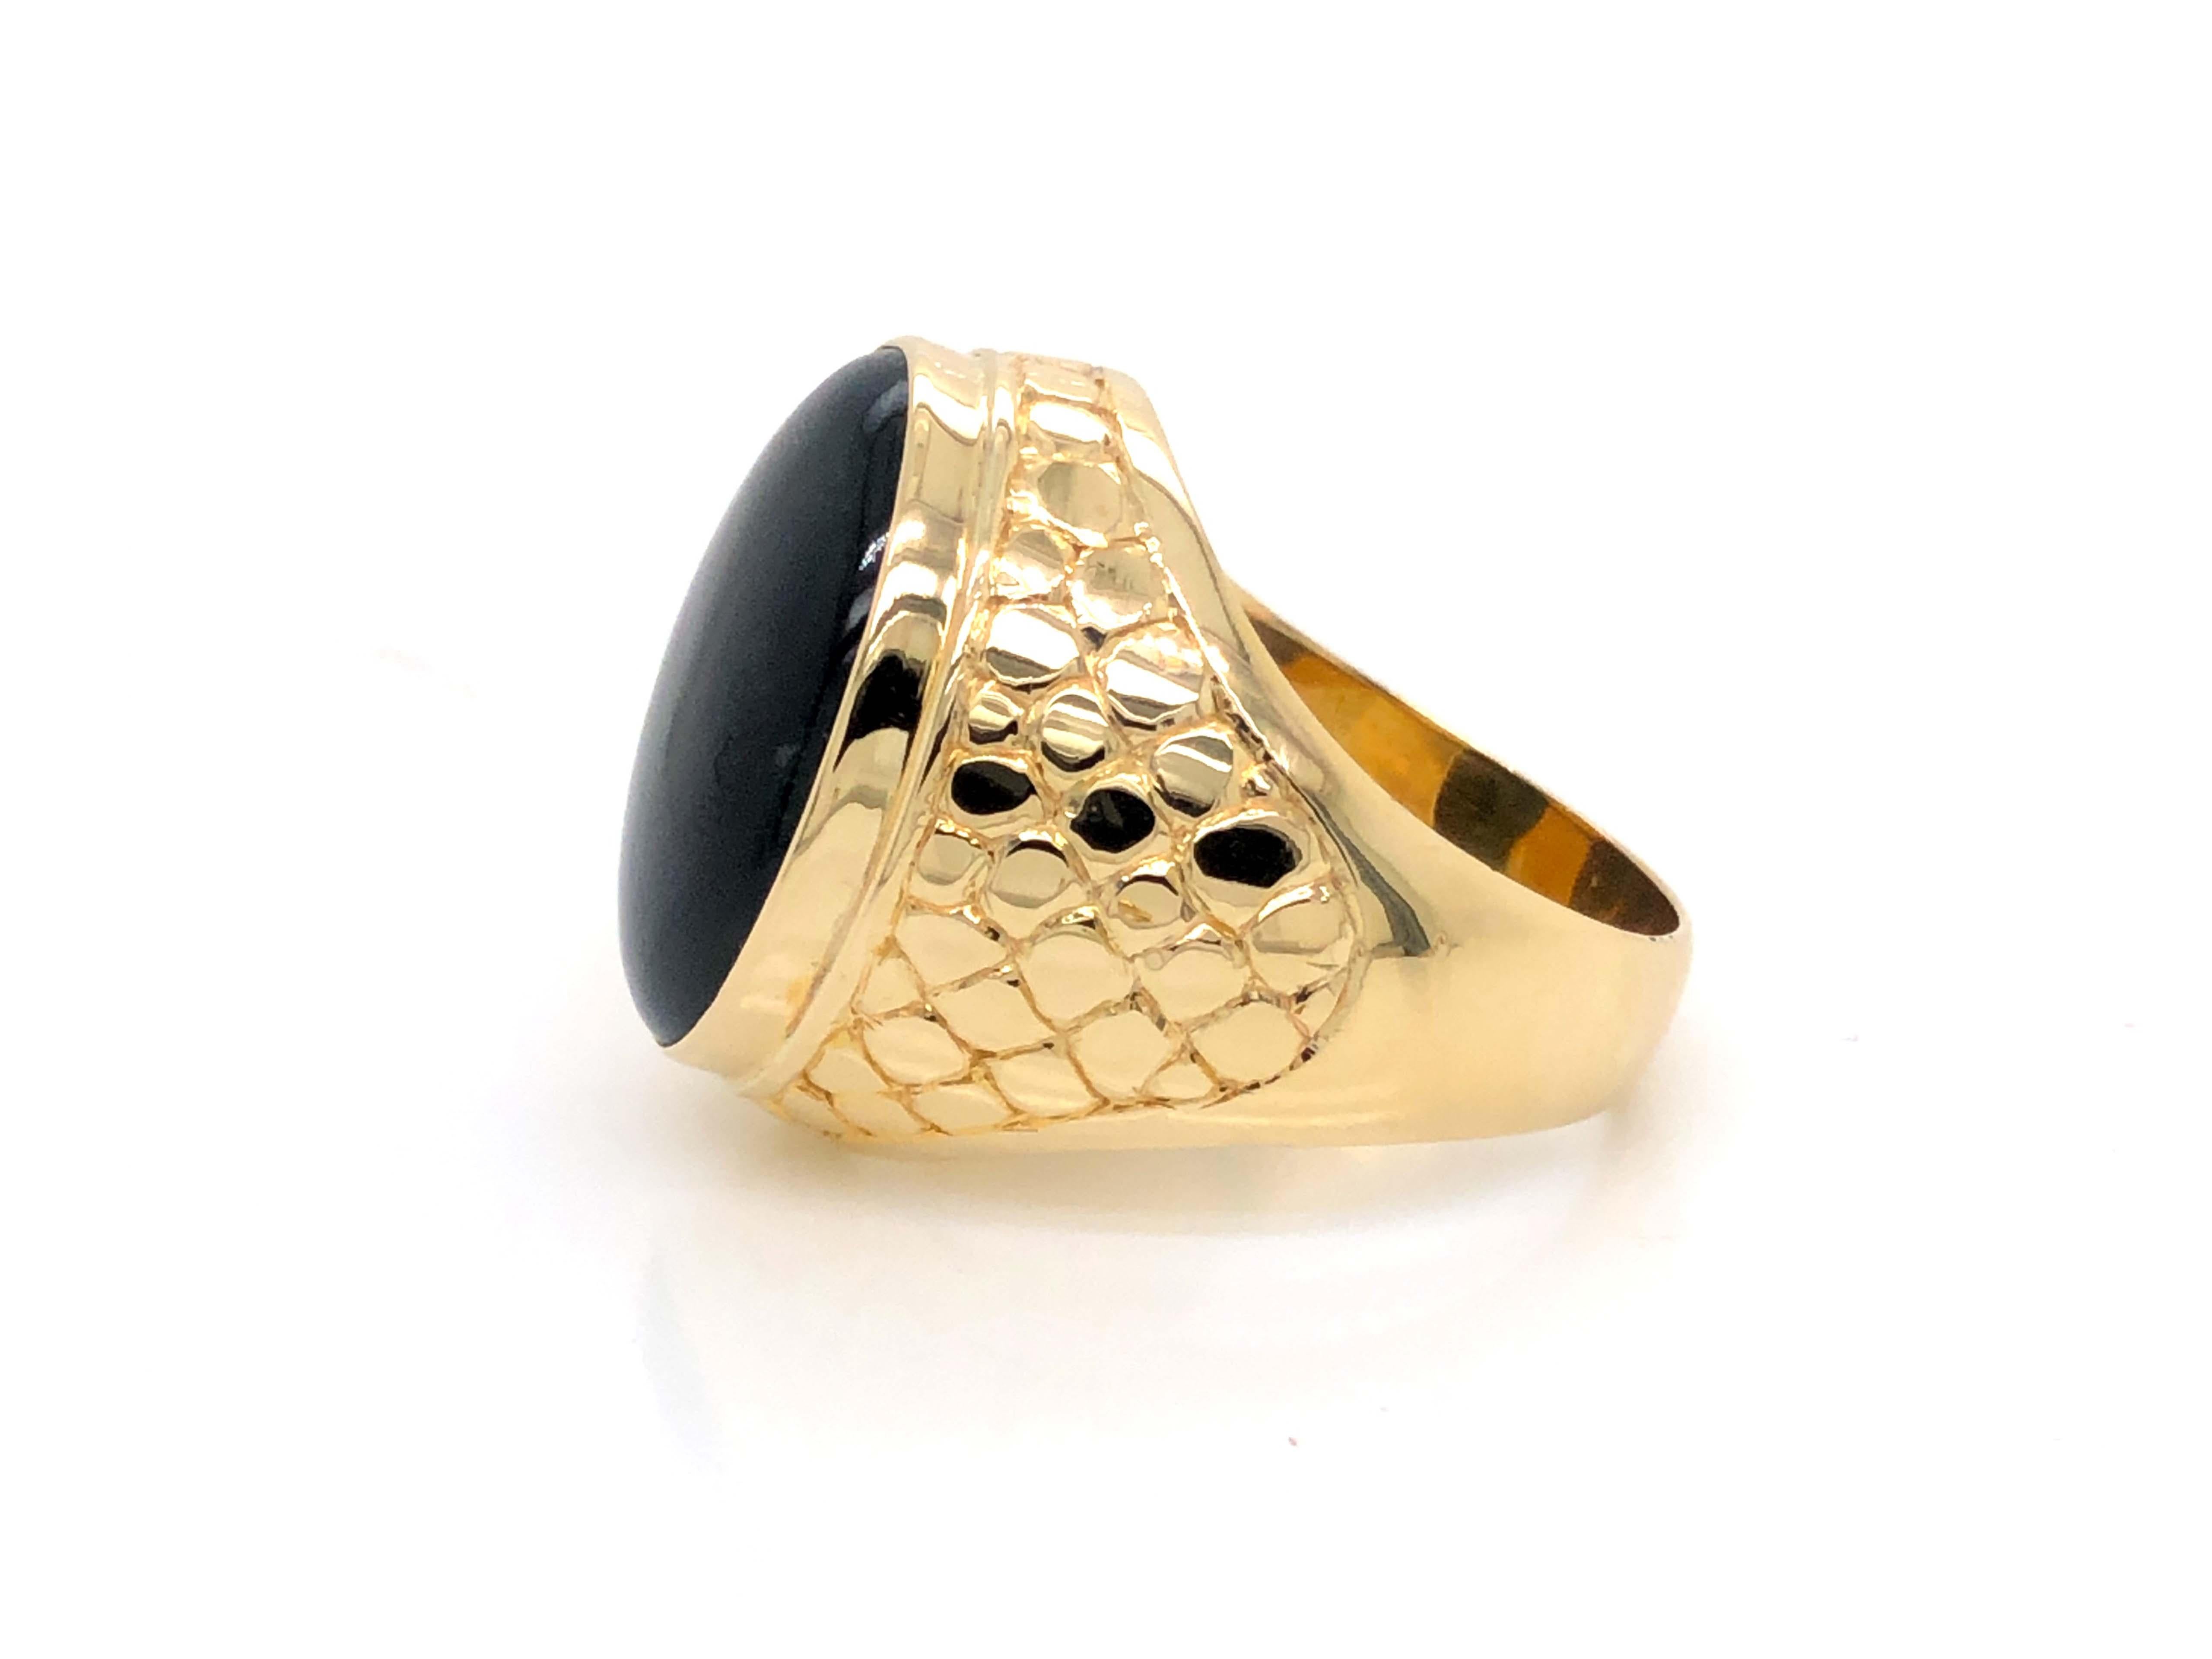 Modern Vintage Men's Large Black Jade Ring with Reptile Design in 14k Yellow Gold